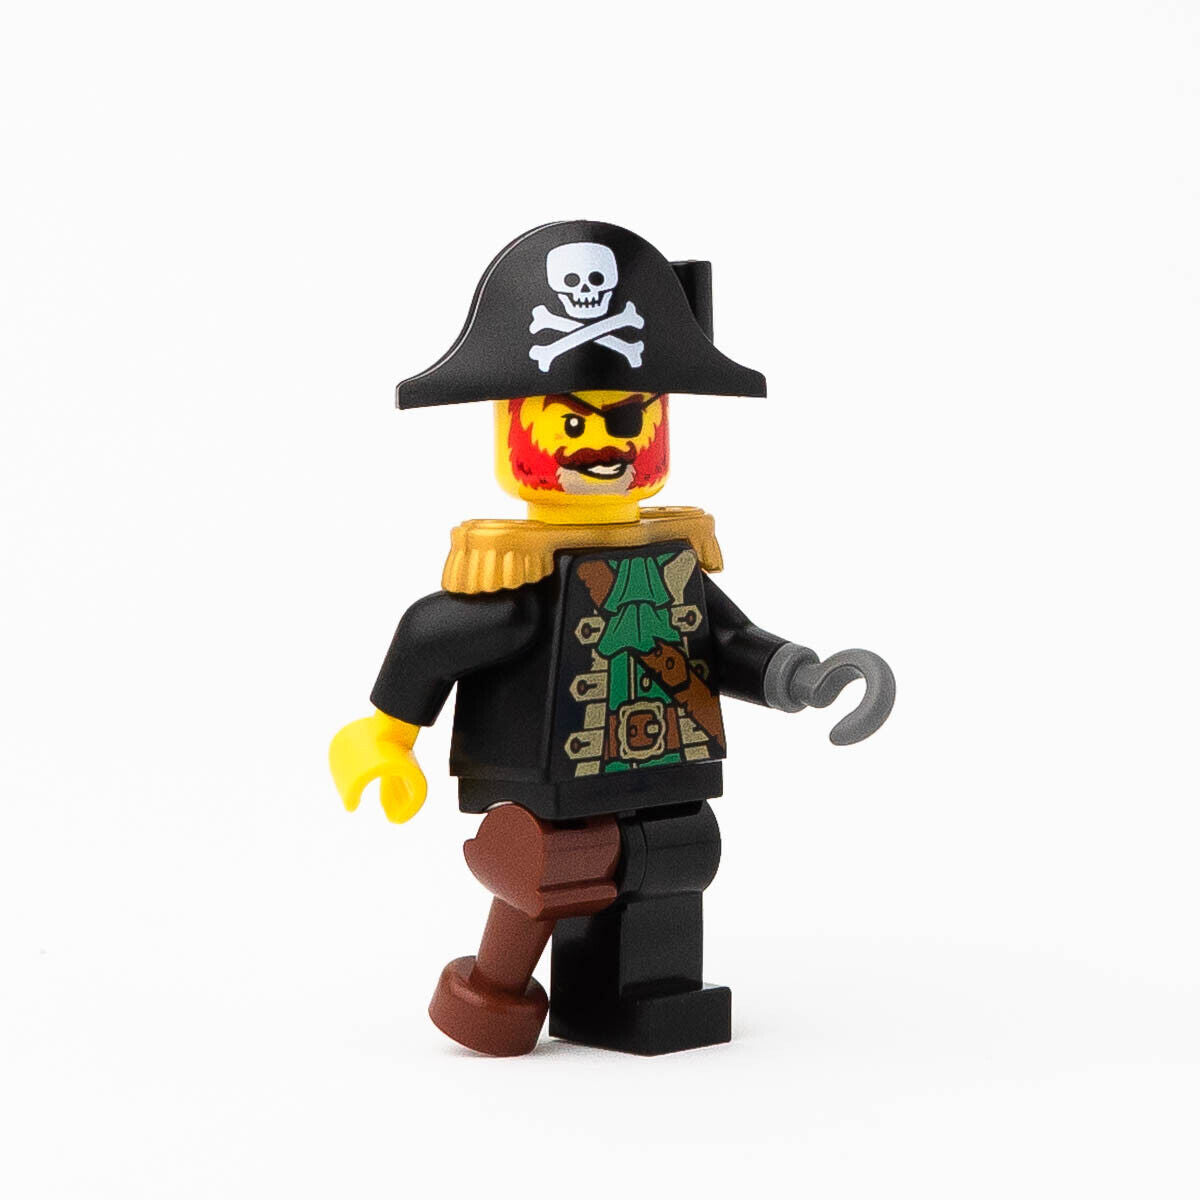 New LEGO Captain Redbeard Minifigure - Pirates of Barracuda Bay - 21322 idea065